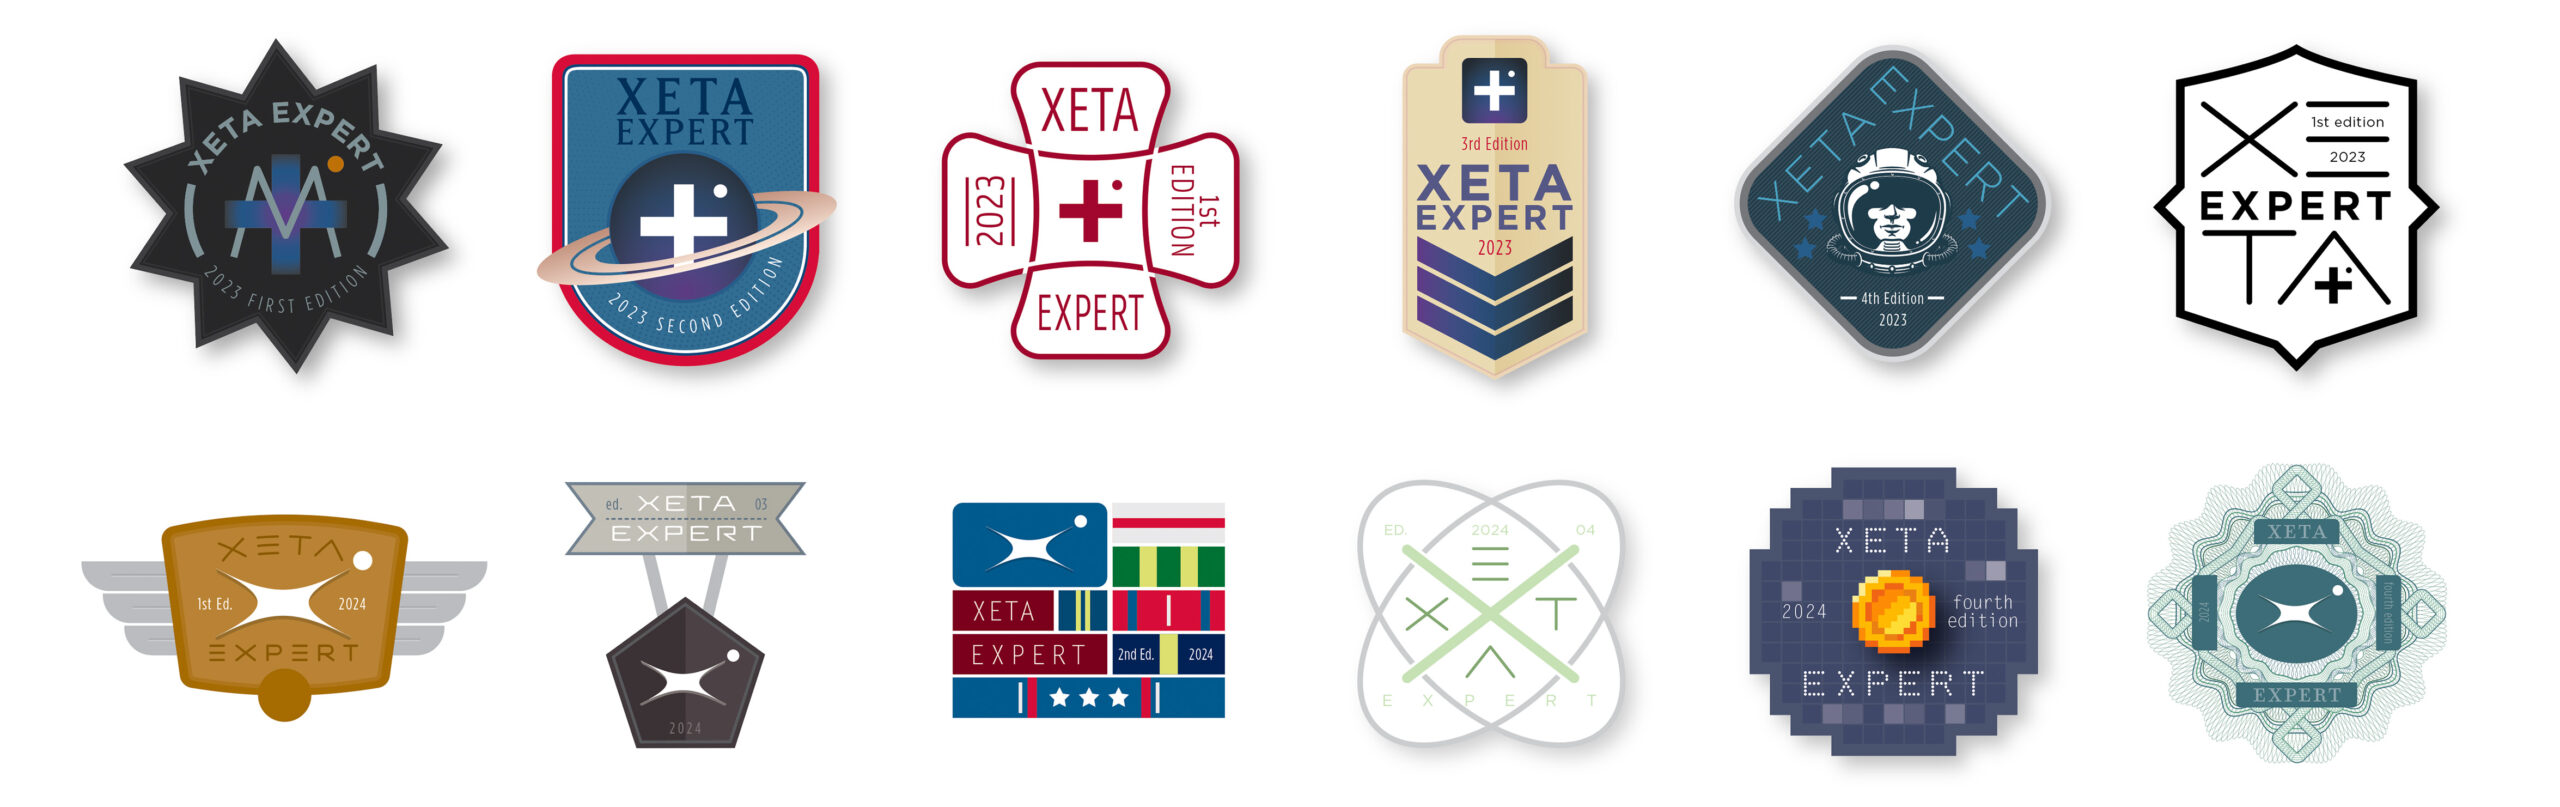 Xeta Expert badges